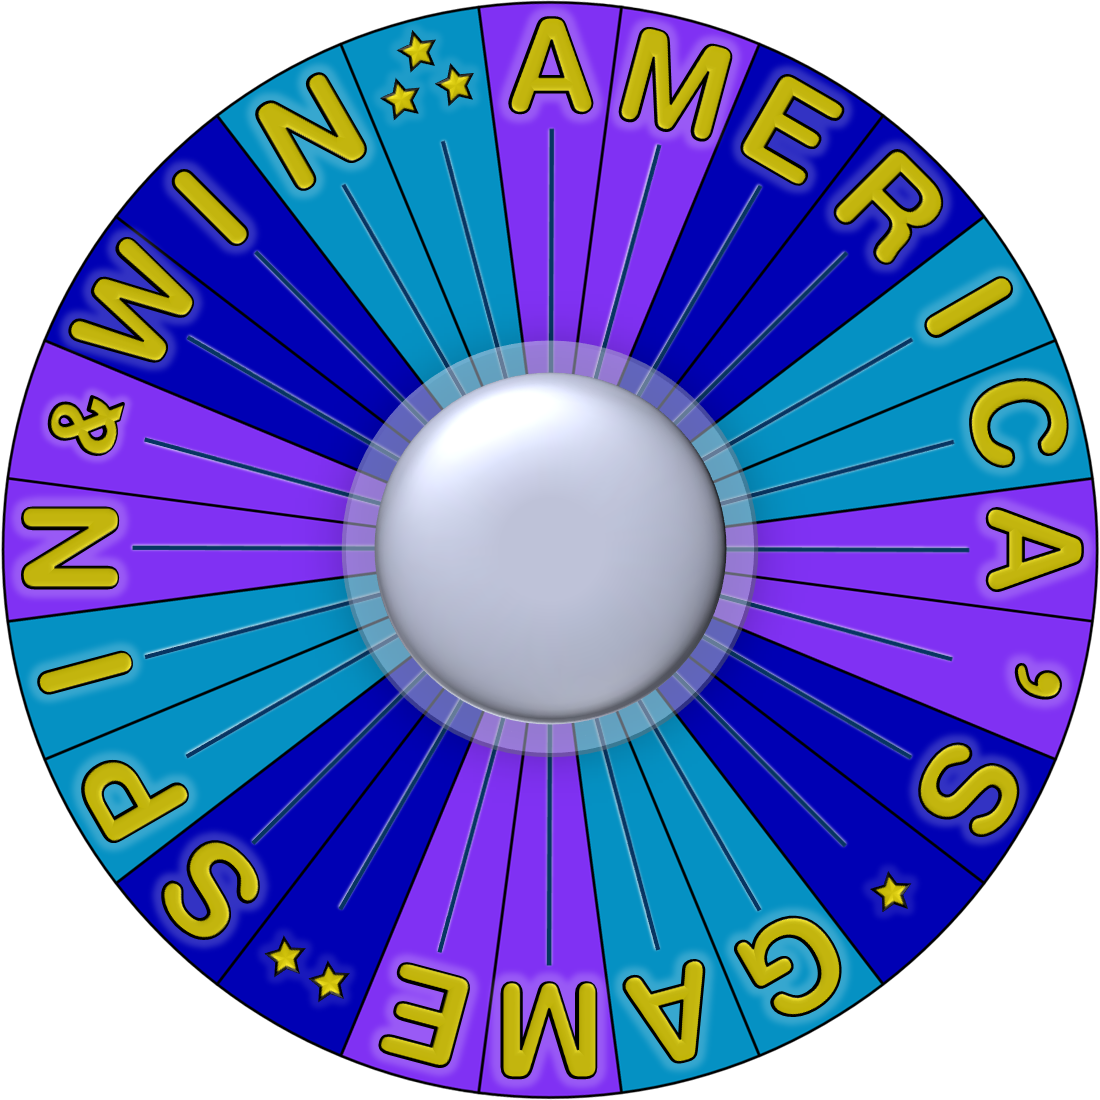 Image - Bonus Wheel S31.png | Game Shows Wiki | Fandom powered by Wikia1100 x 1100